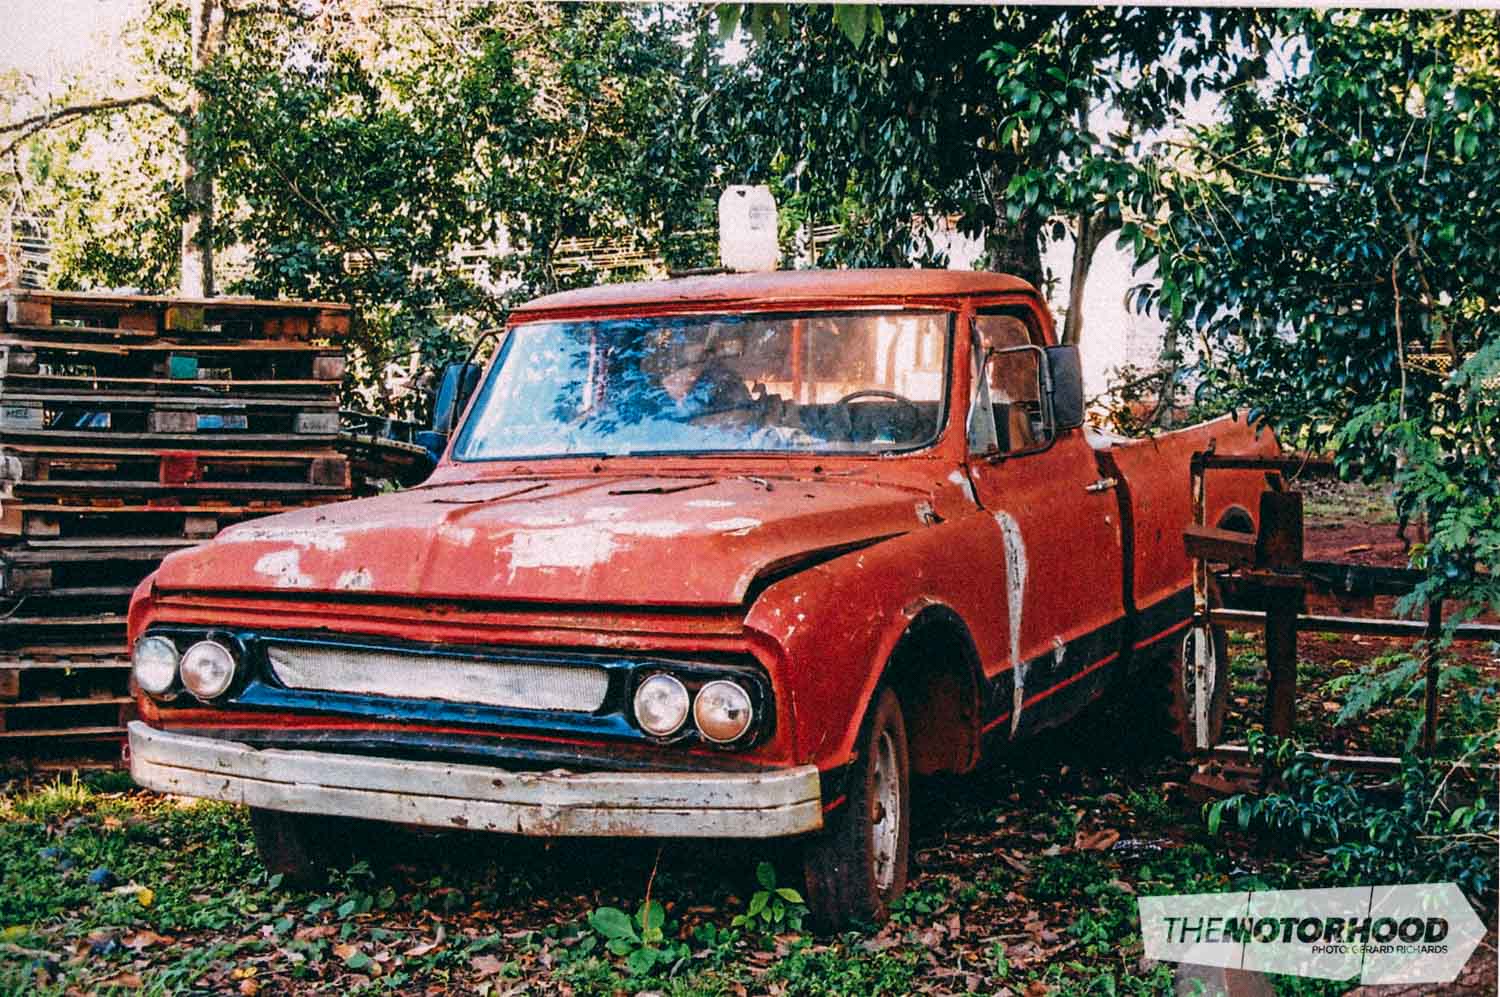 Derelict ’70s Chev pickup, Puerto Iguazú, Argentina